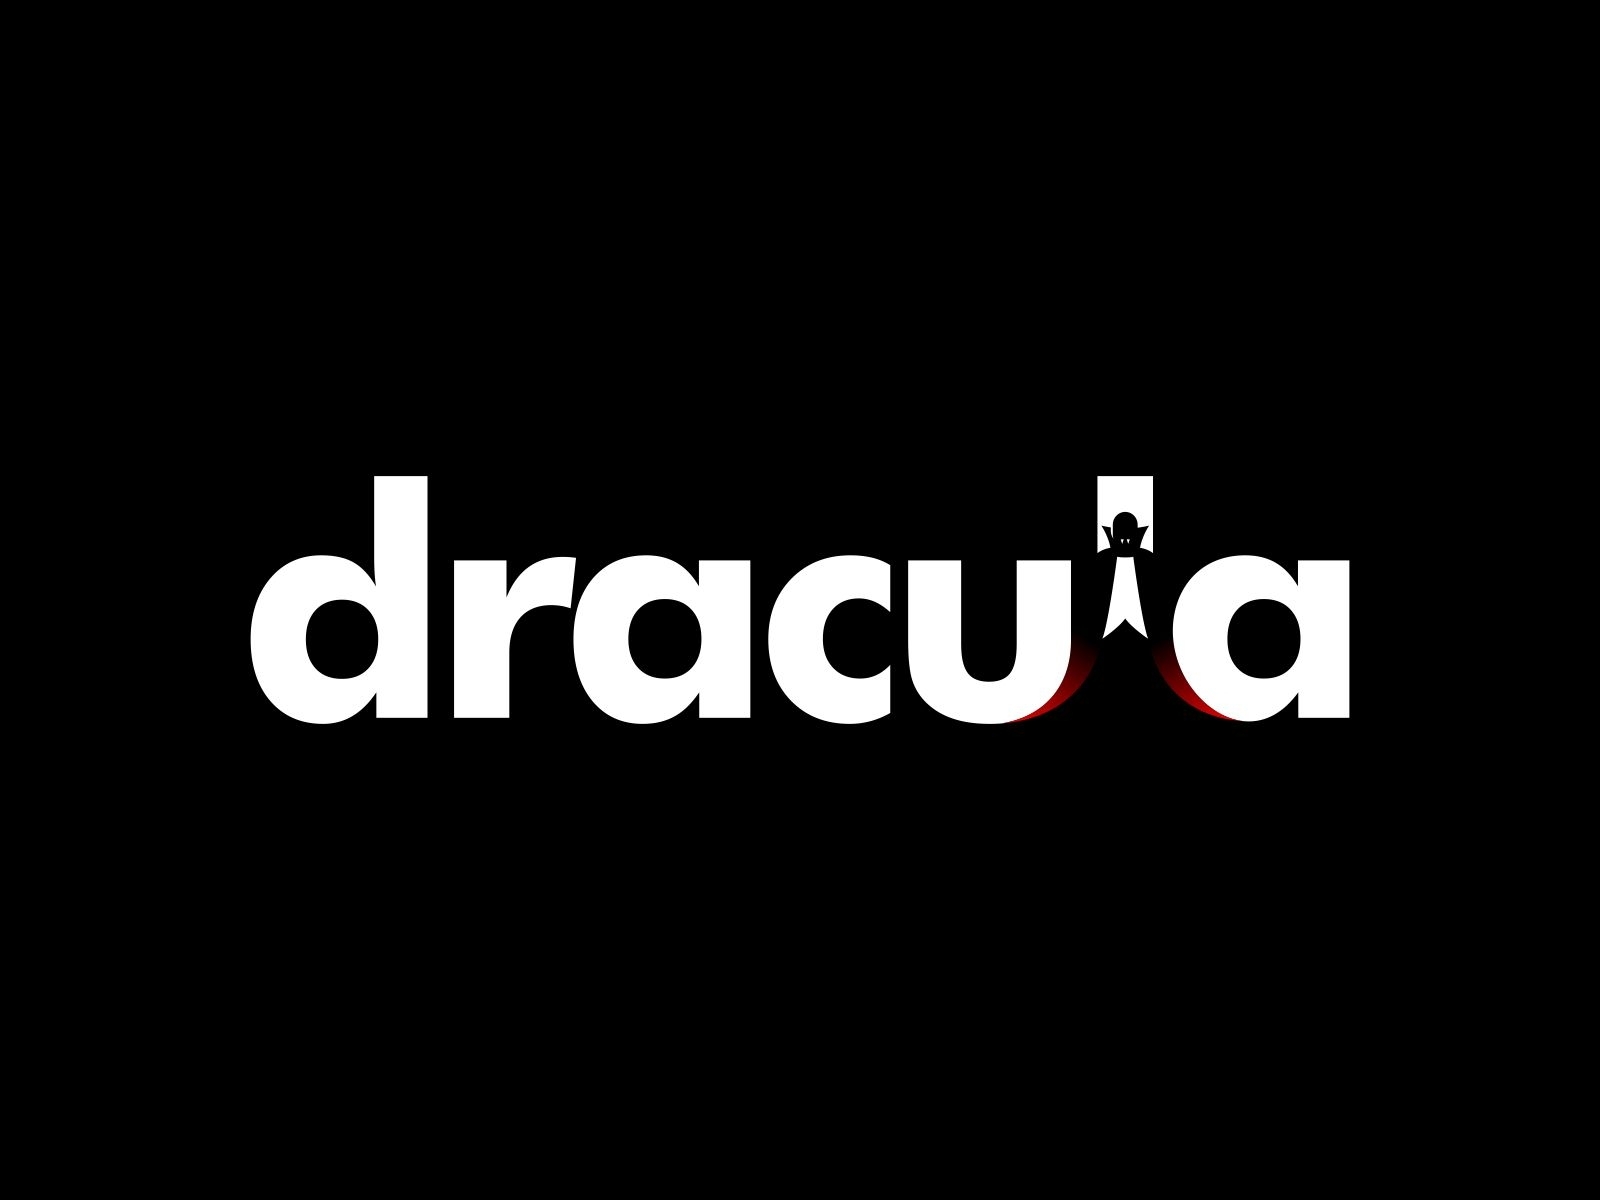 dracula by Buqancreative on Dribbble